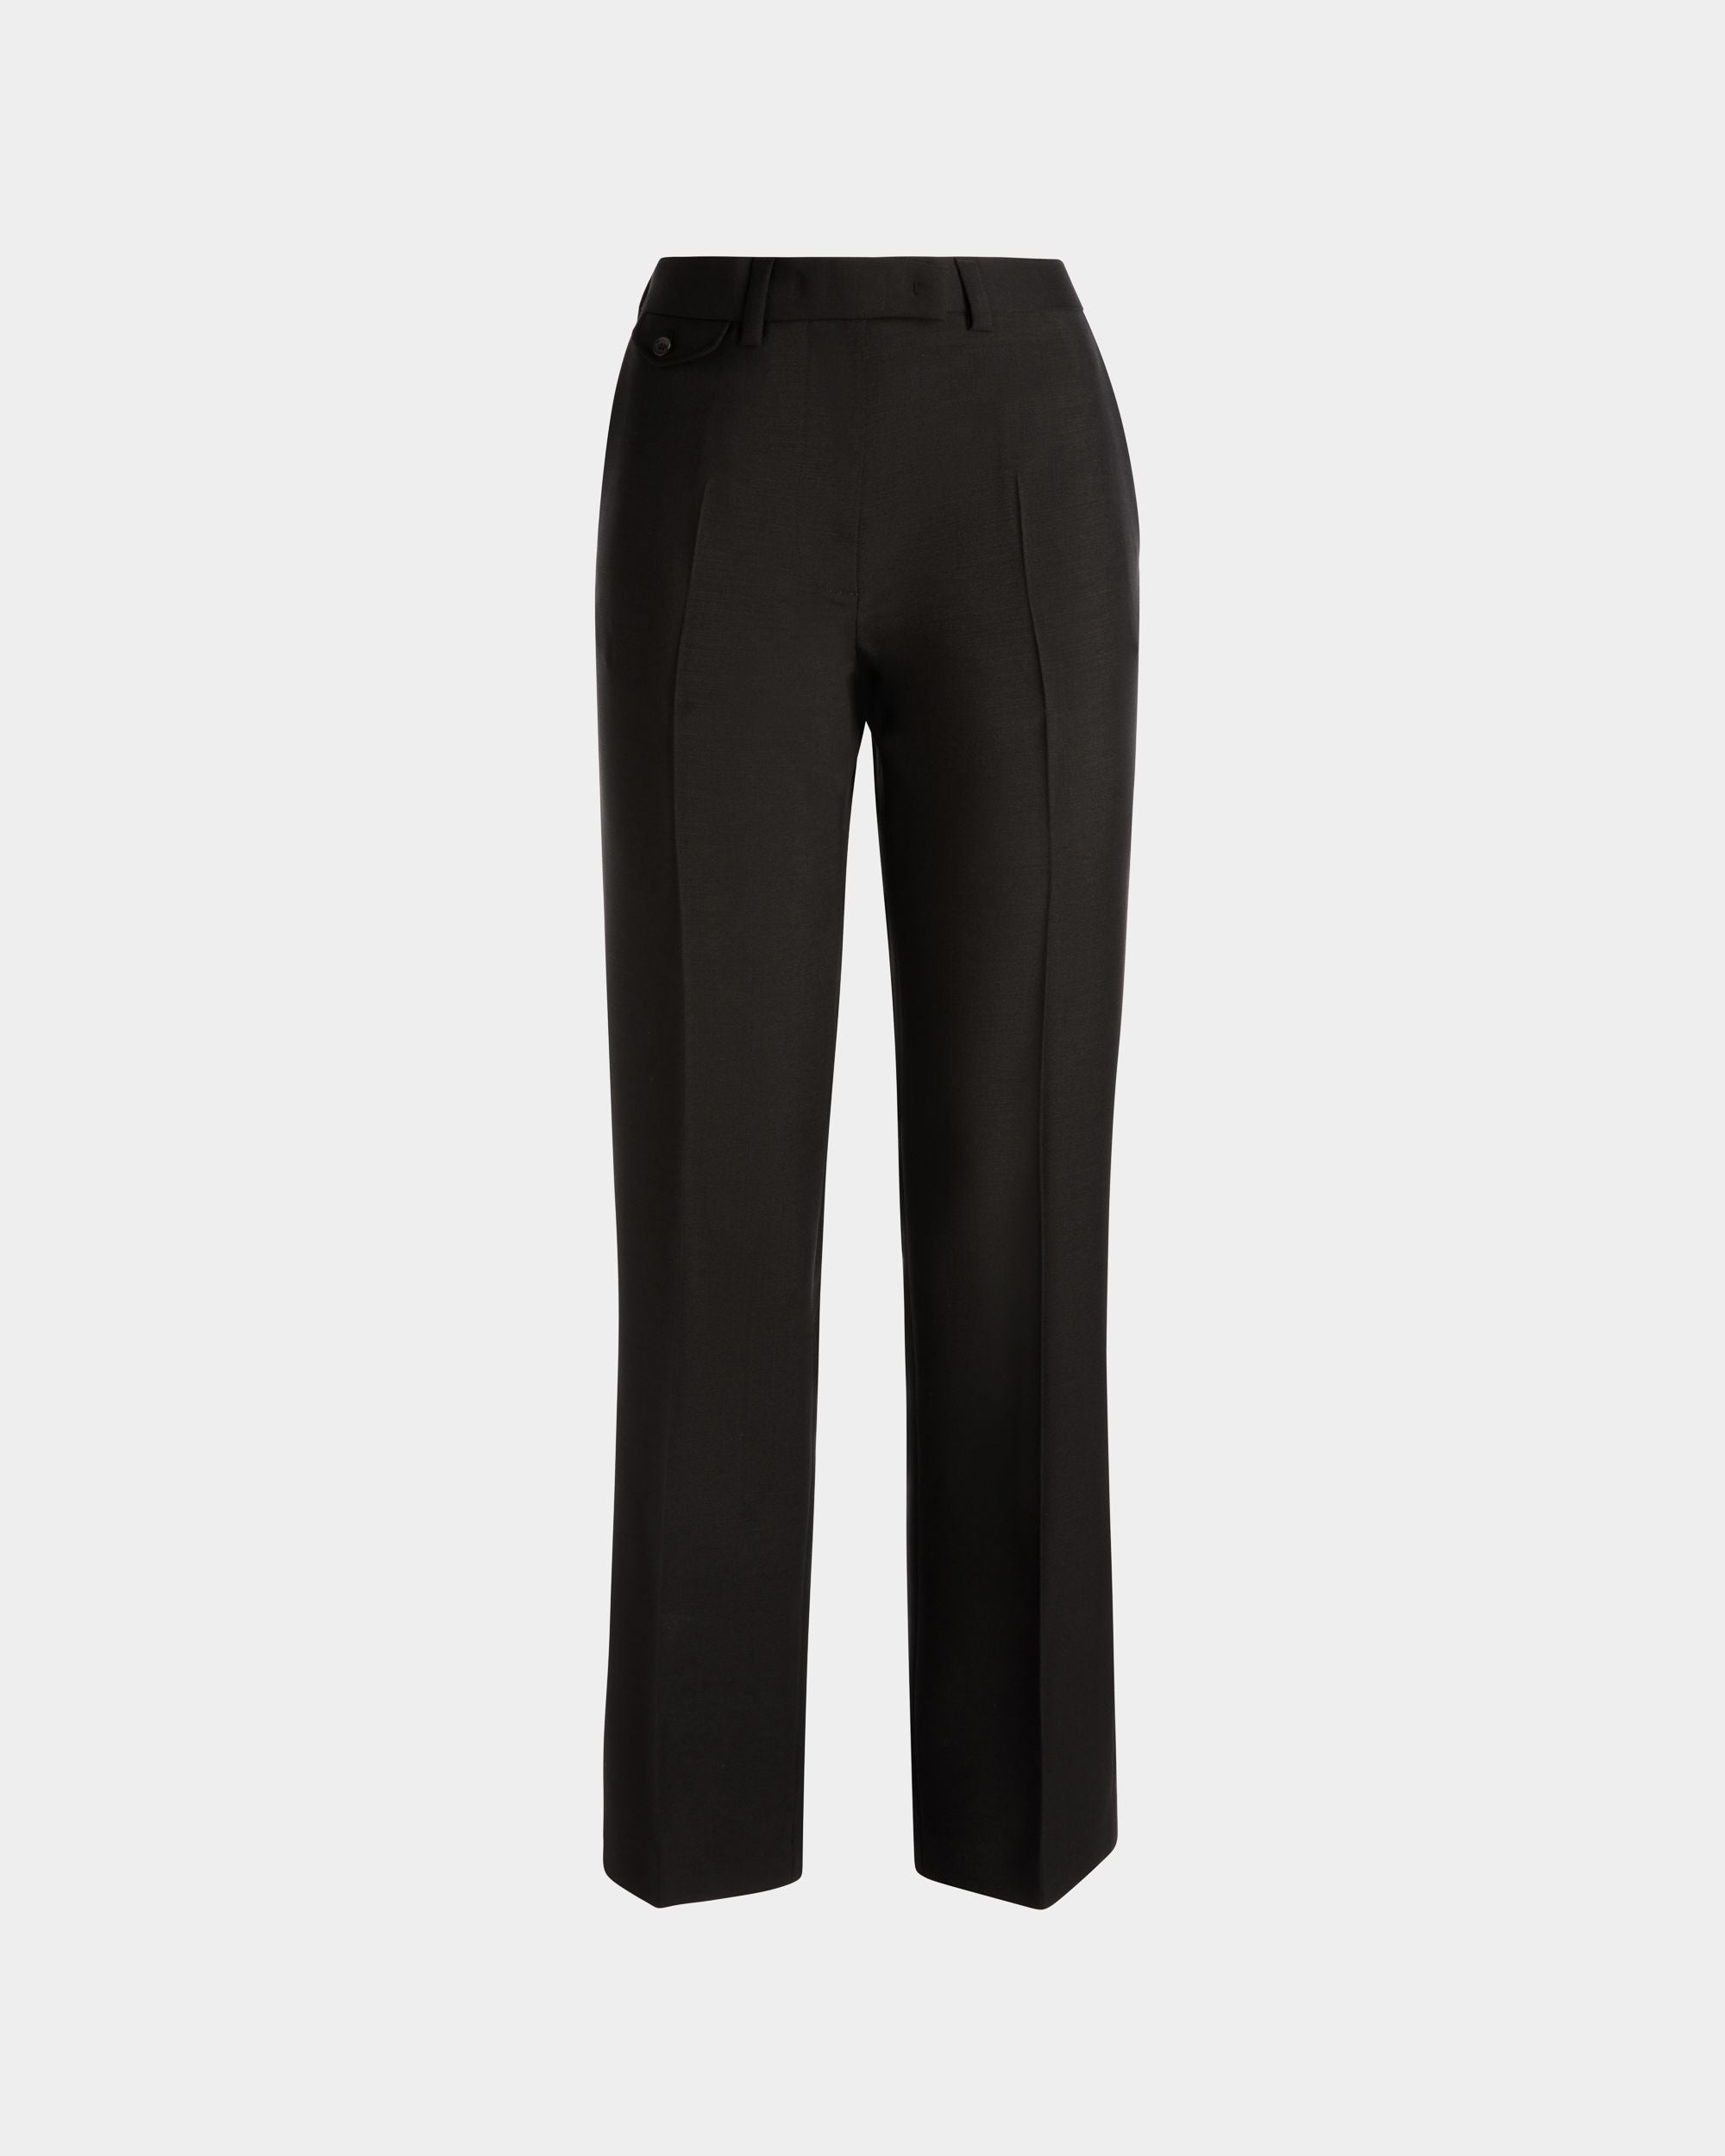 Tailored Straight Leg Pants | Women's Pants | Black Mohair Wool | Bally | Still Life Front